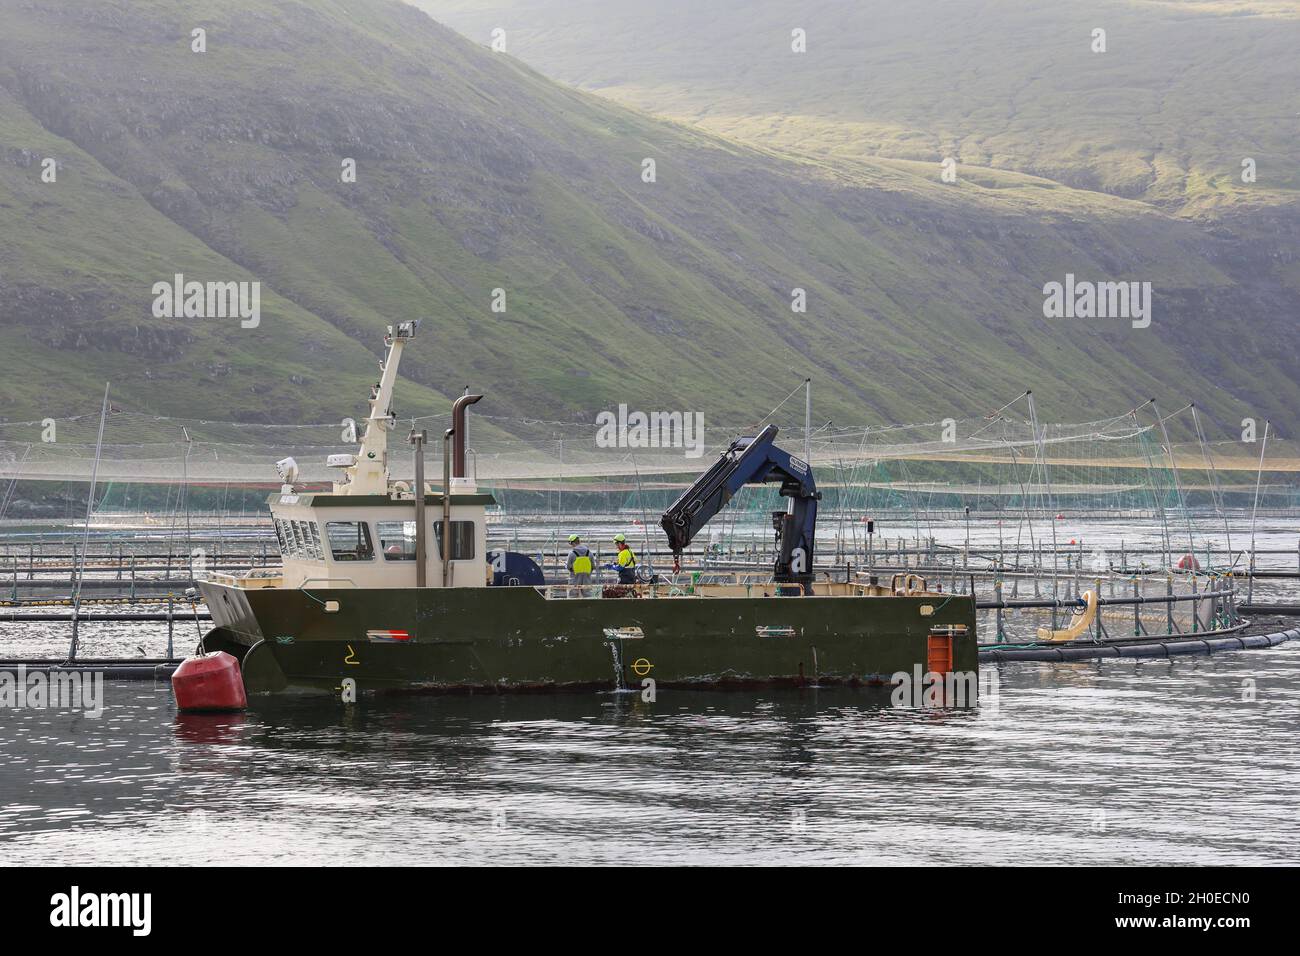 Salmon farming in the bay of Vestmanna, Streymoy Island, Faroe Islands, Scandinavia,Europe. Stock Photo